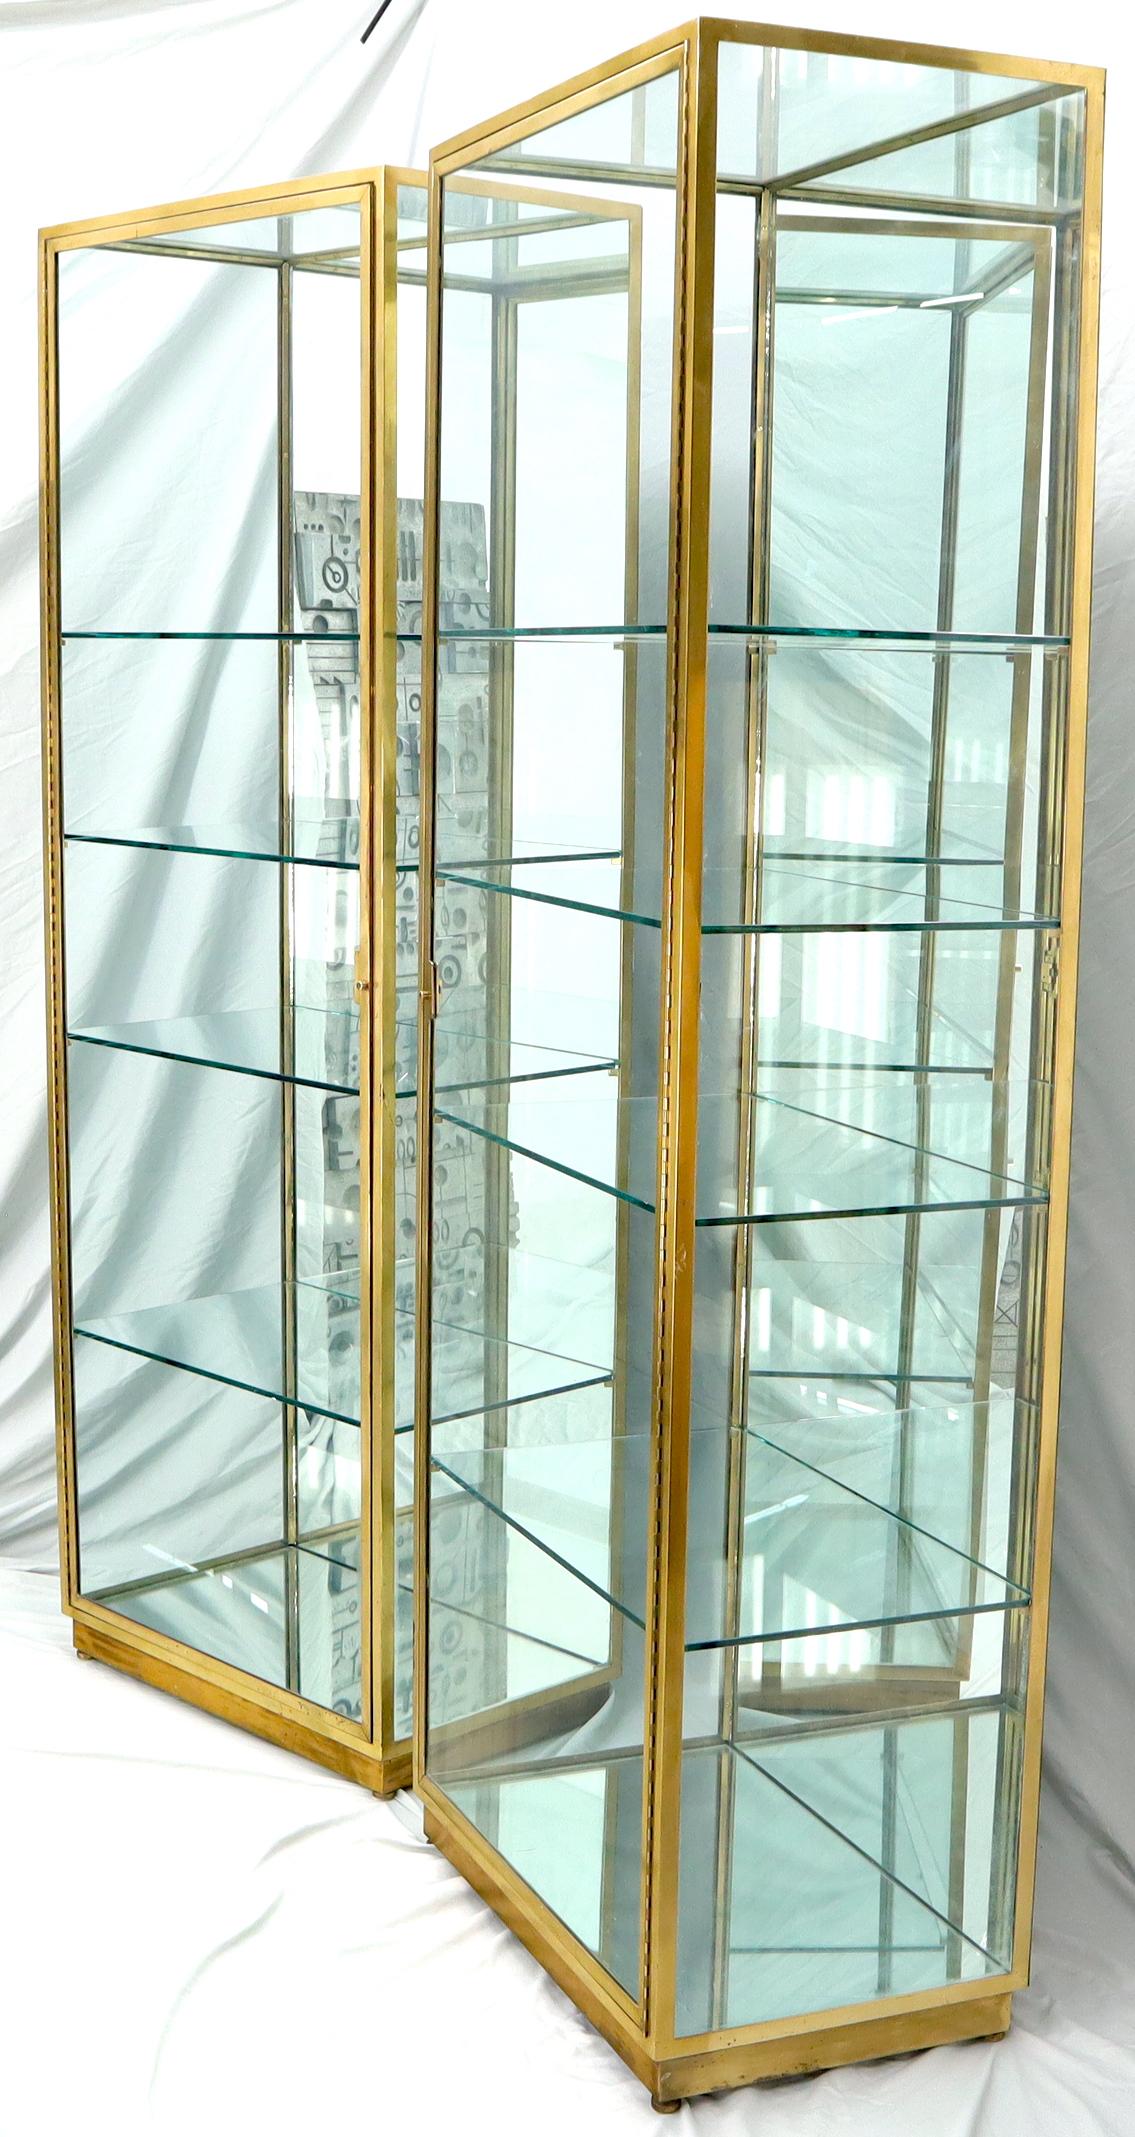 Pair of Mid-Century Modern stunning braised brass cube shape showcase with glass shelves vitrines.